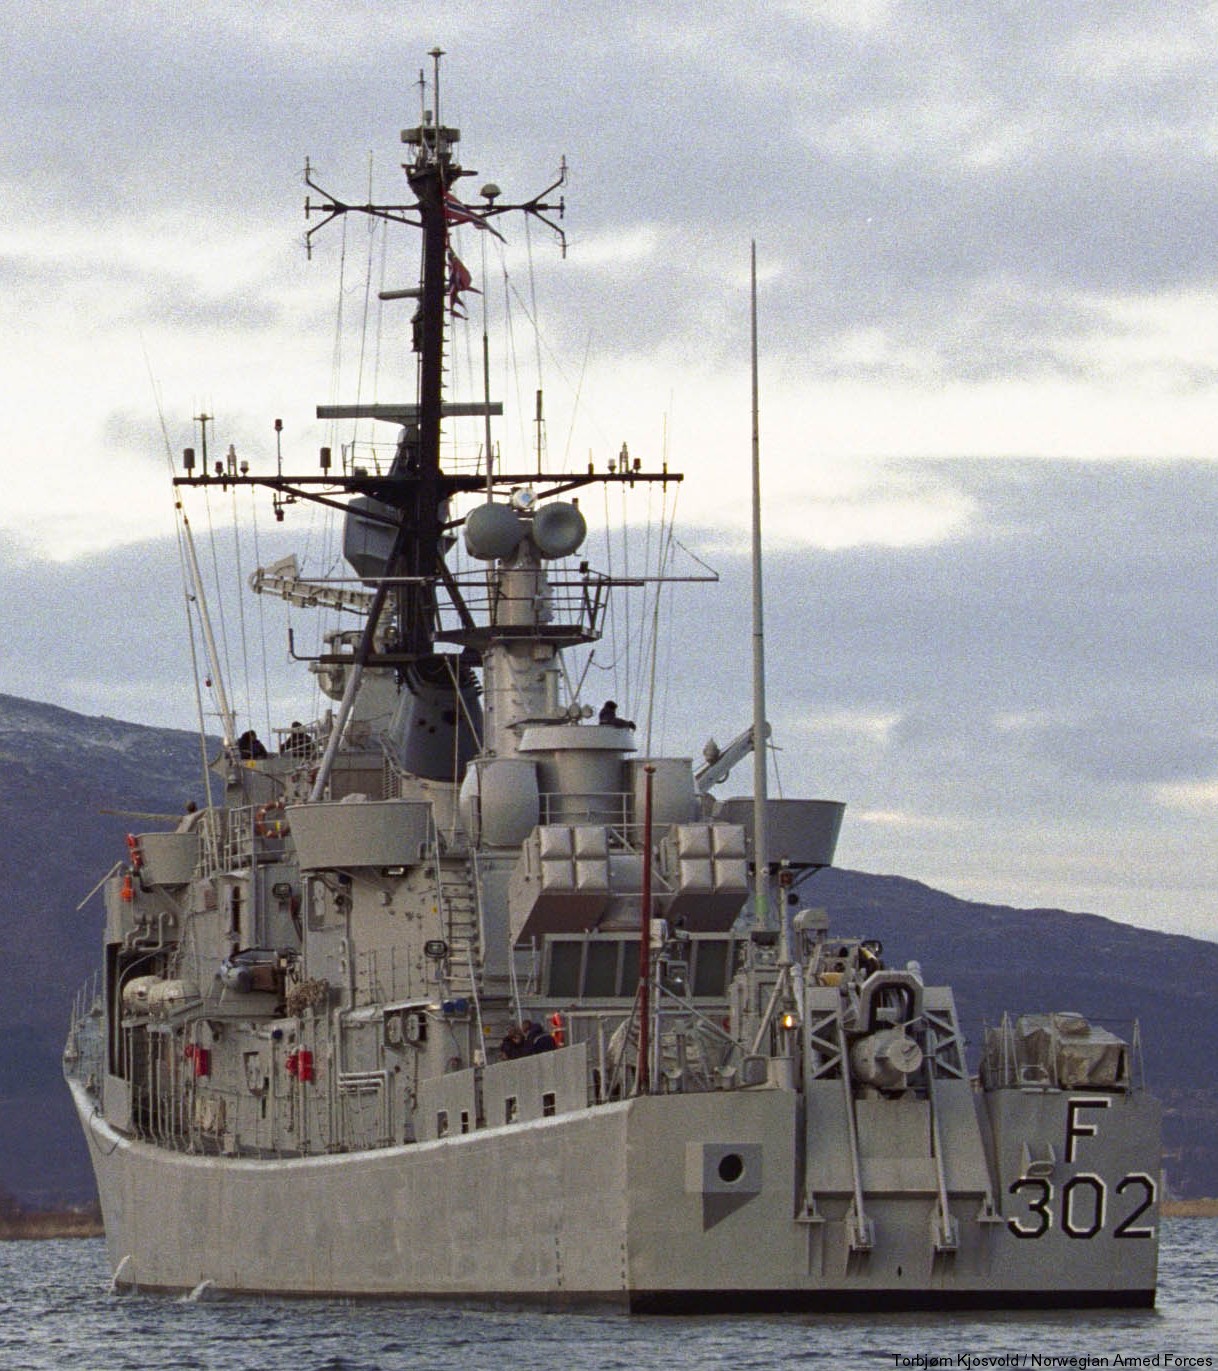 f-302 hnoms trondheim knm oslo class frigate royal norwegian navy sjoforsvaret 10